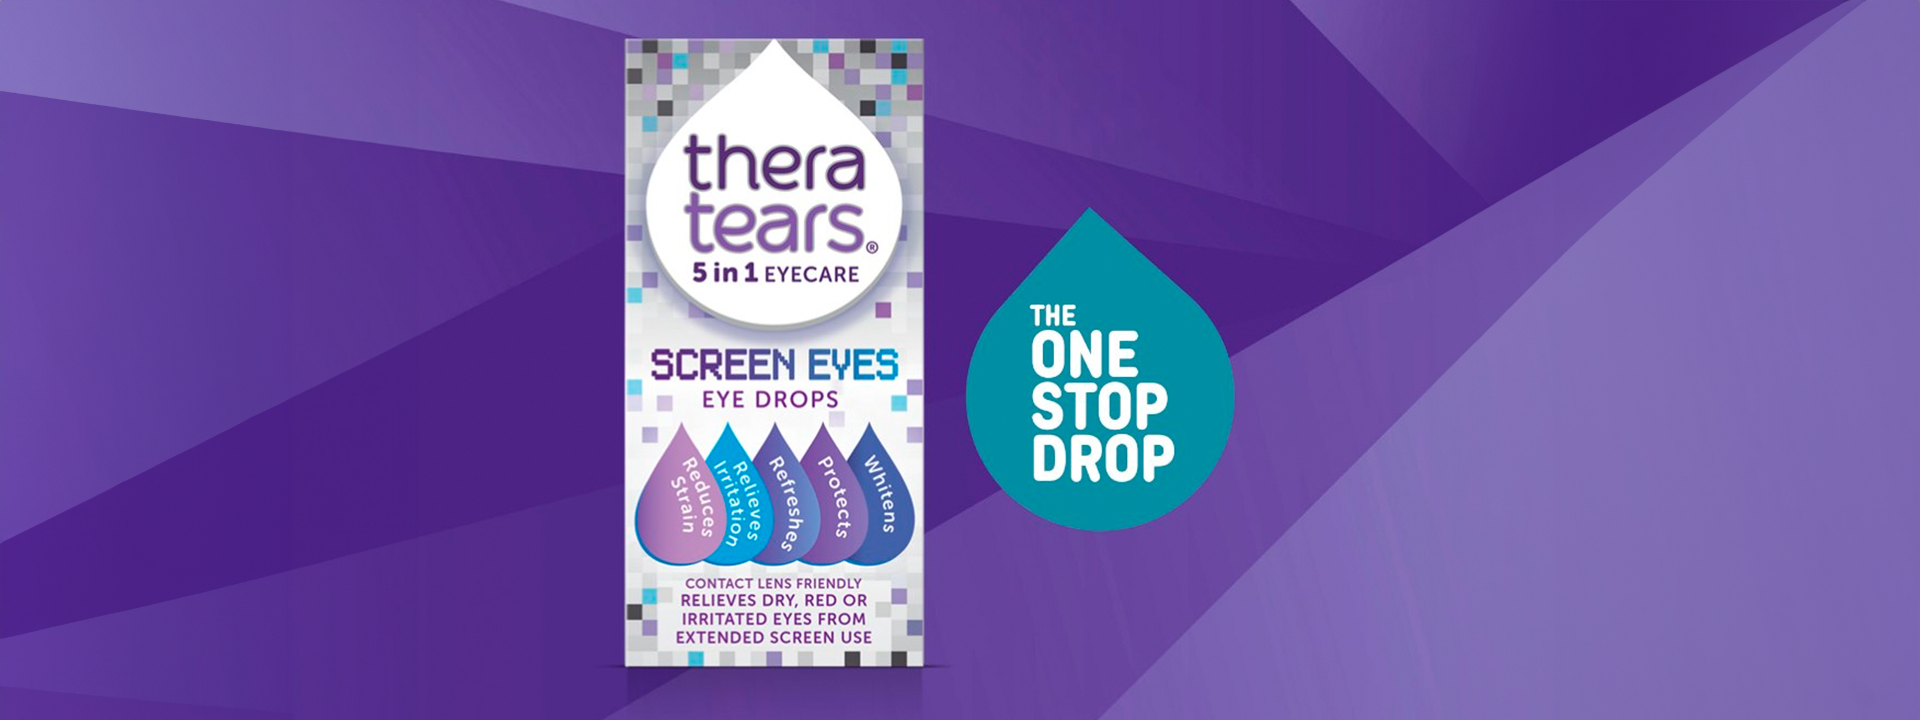 thera-tears-hero-copy